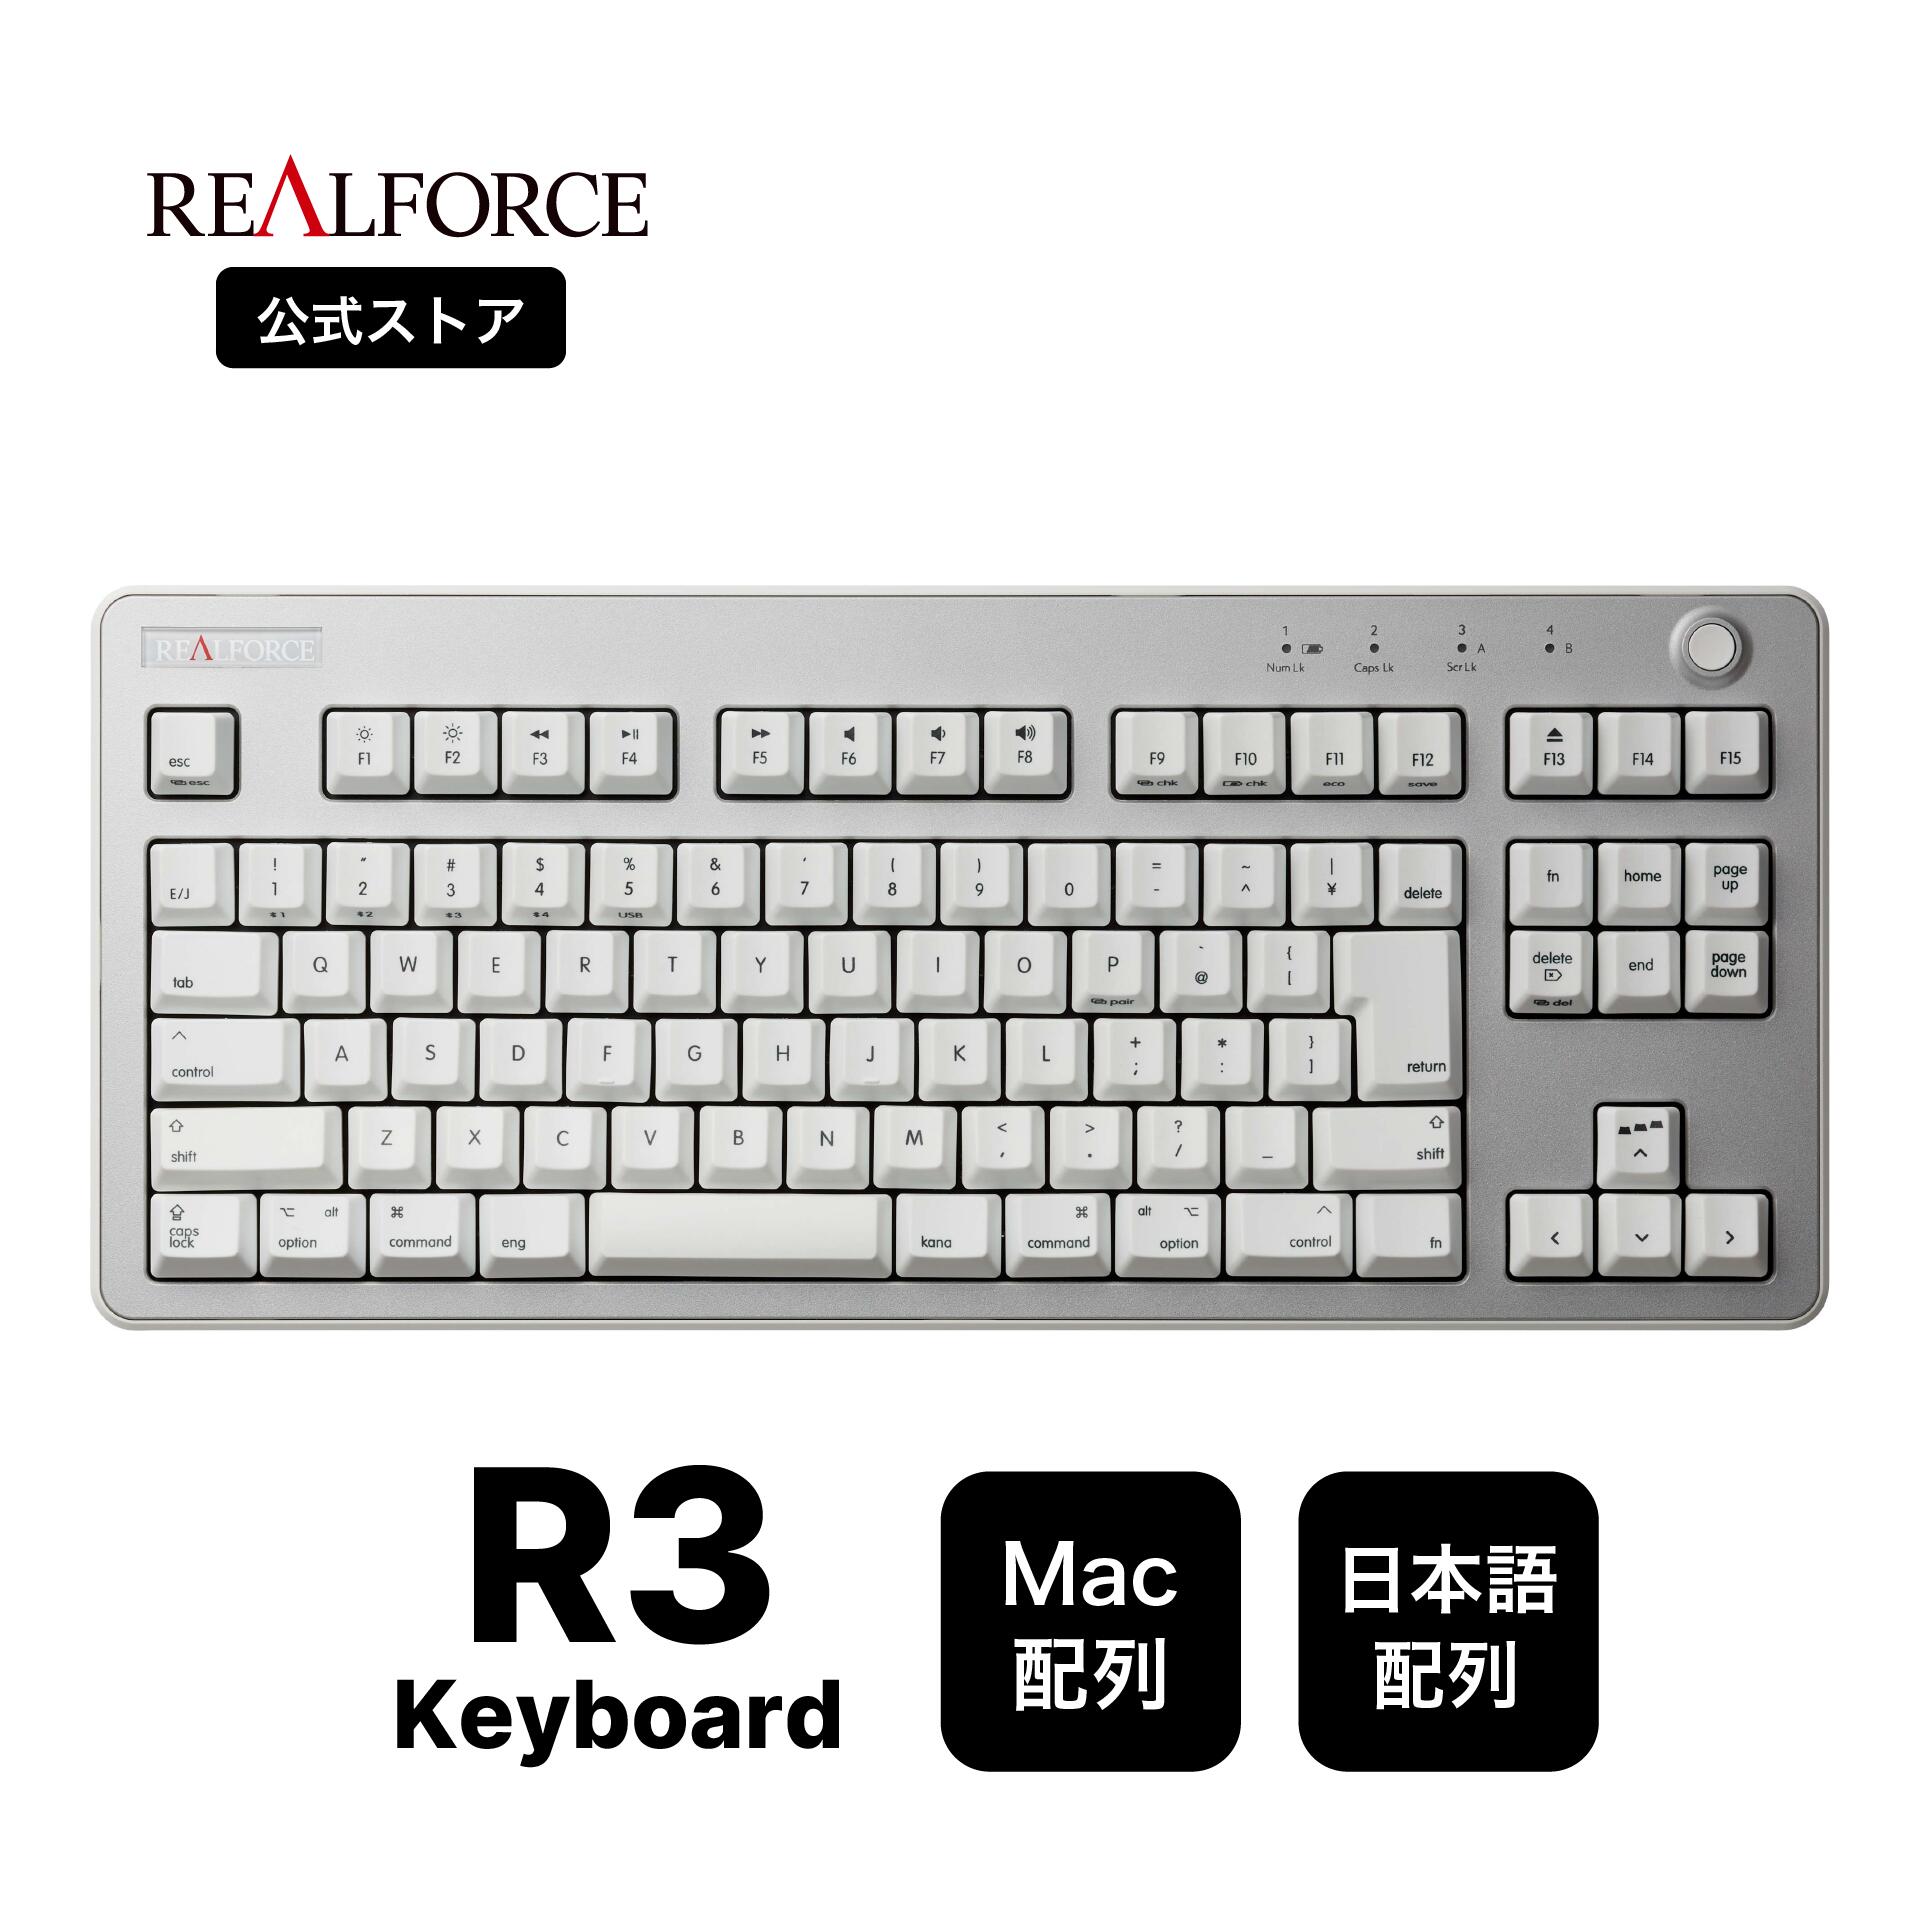  REALFORCE R3 キーボード Mac用配列 45g Mac 日本語配列 フルキーボード テンキーレス ライトシルバー ホワイト Bluetooth USB 静音 昇華印刷 ワイヤレス 無線 東プレ リアルフォース